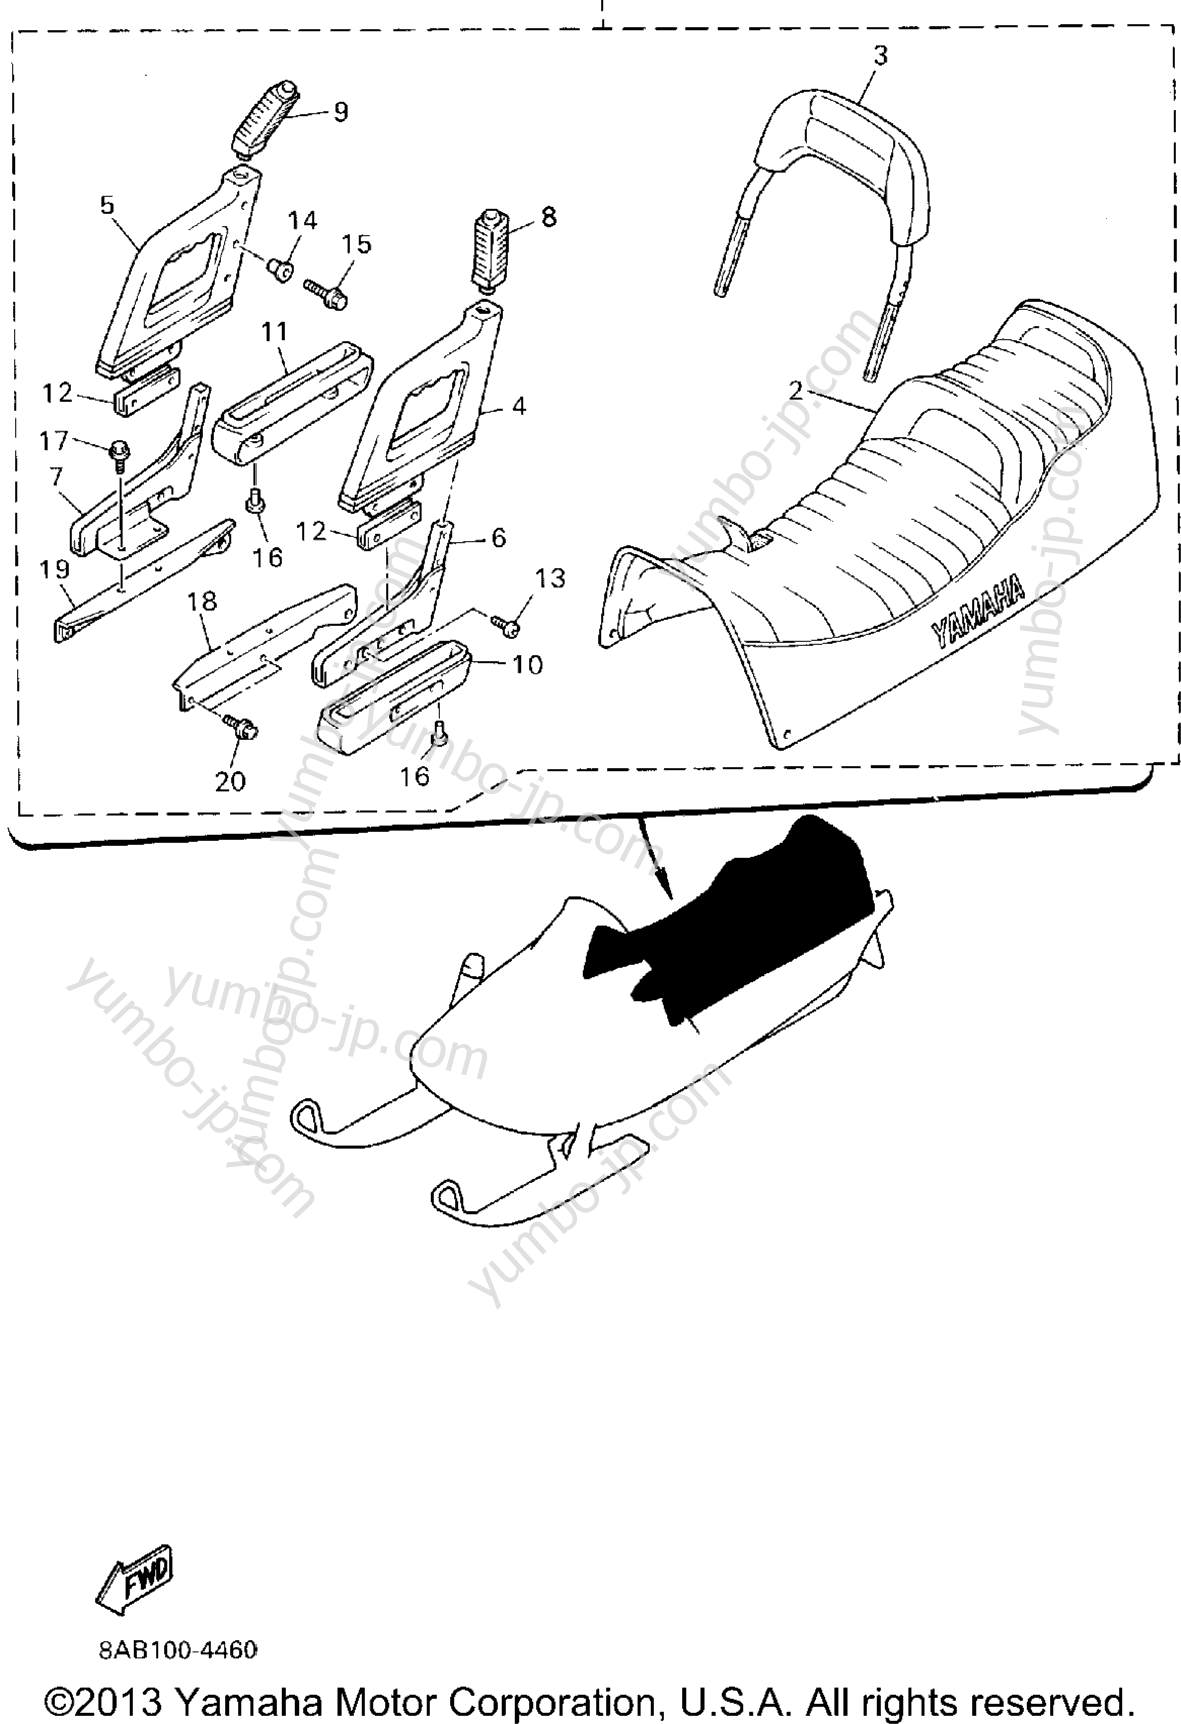 2-Up Seat Kit (Alternate) for snowmobiles YAMAHA VMAX 600 LE (ELEC START) (VX600EU) 1994 year